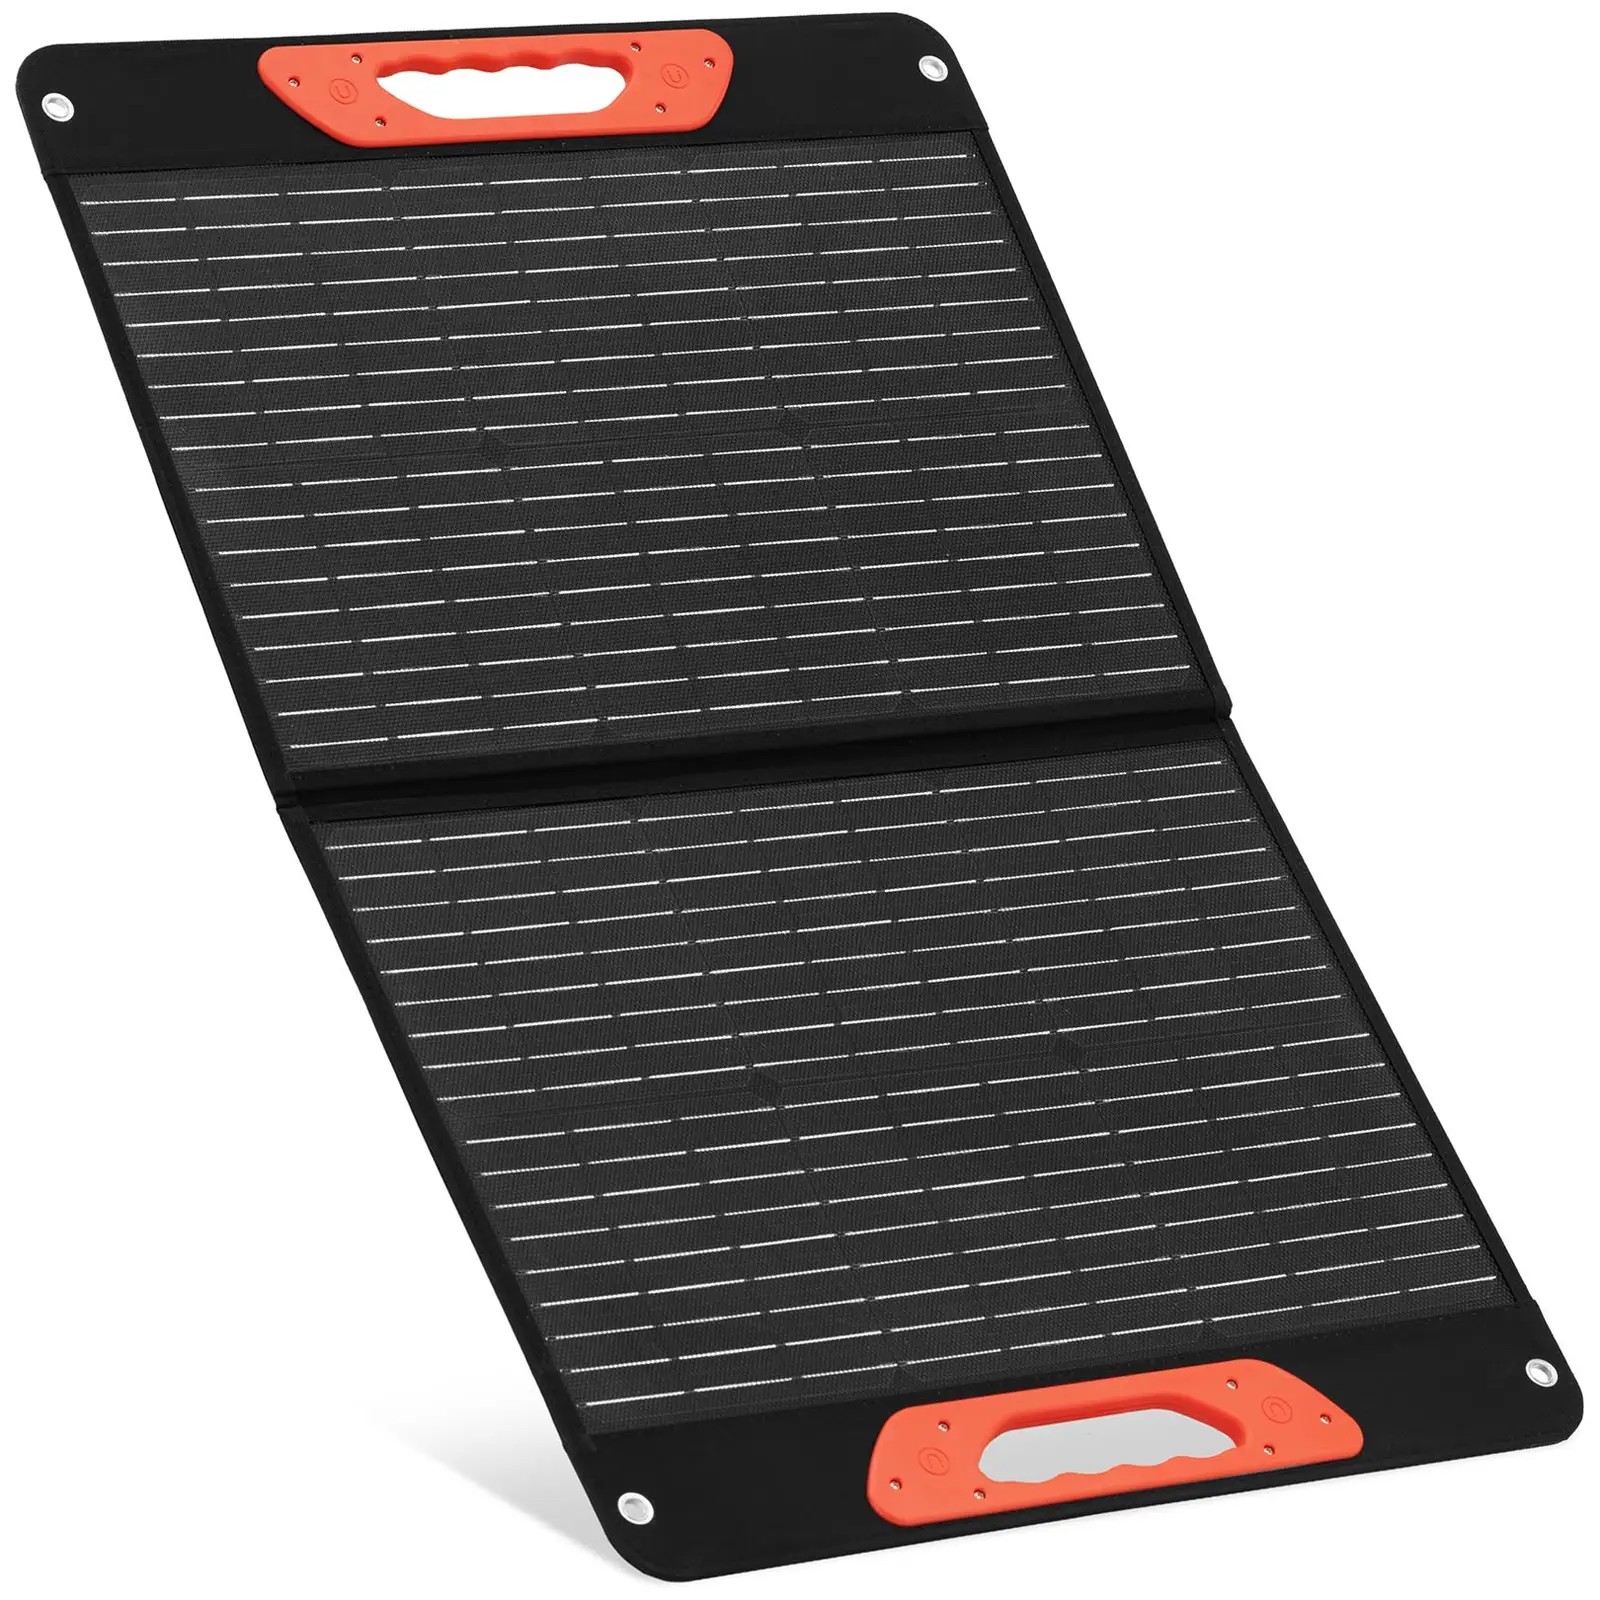 Portable Solar Panel - foldable - 60 W - 2 USB ports